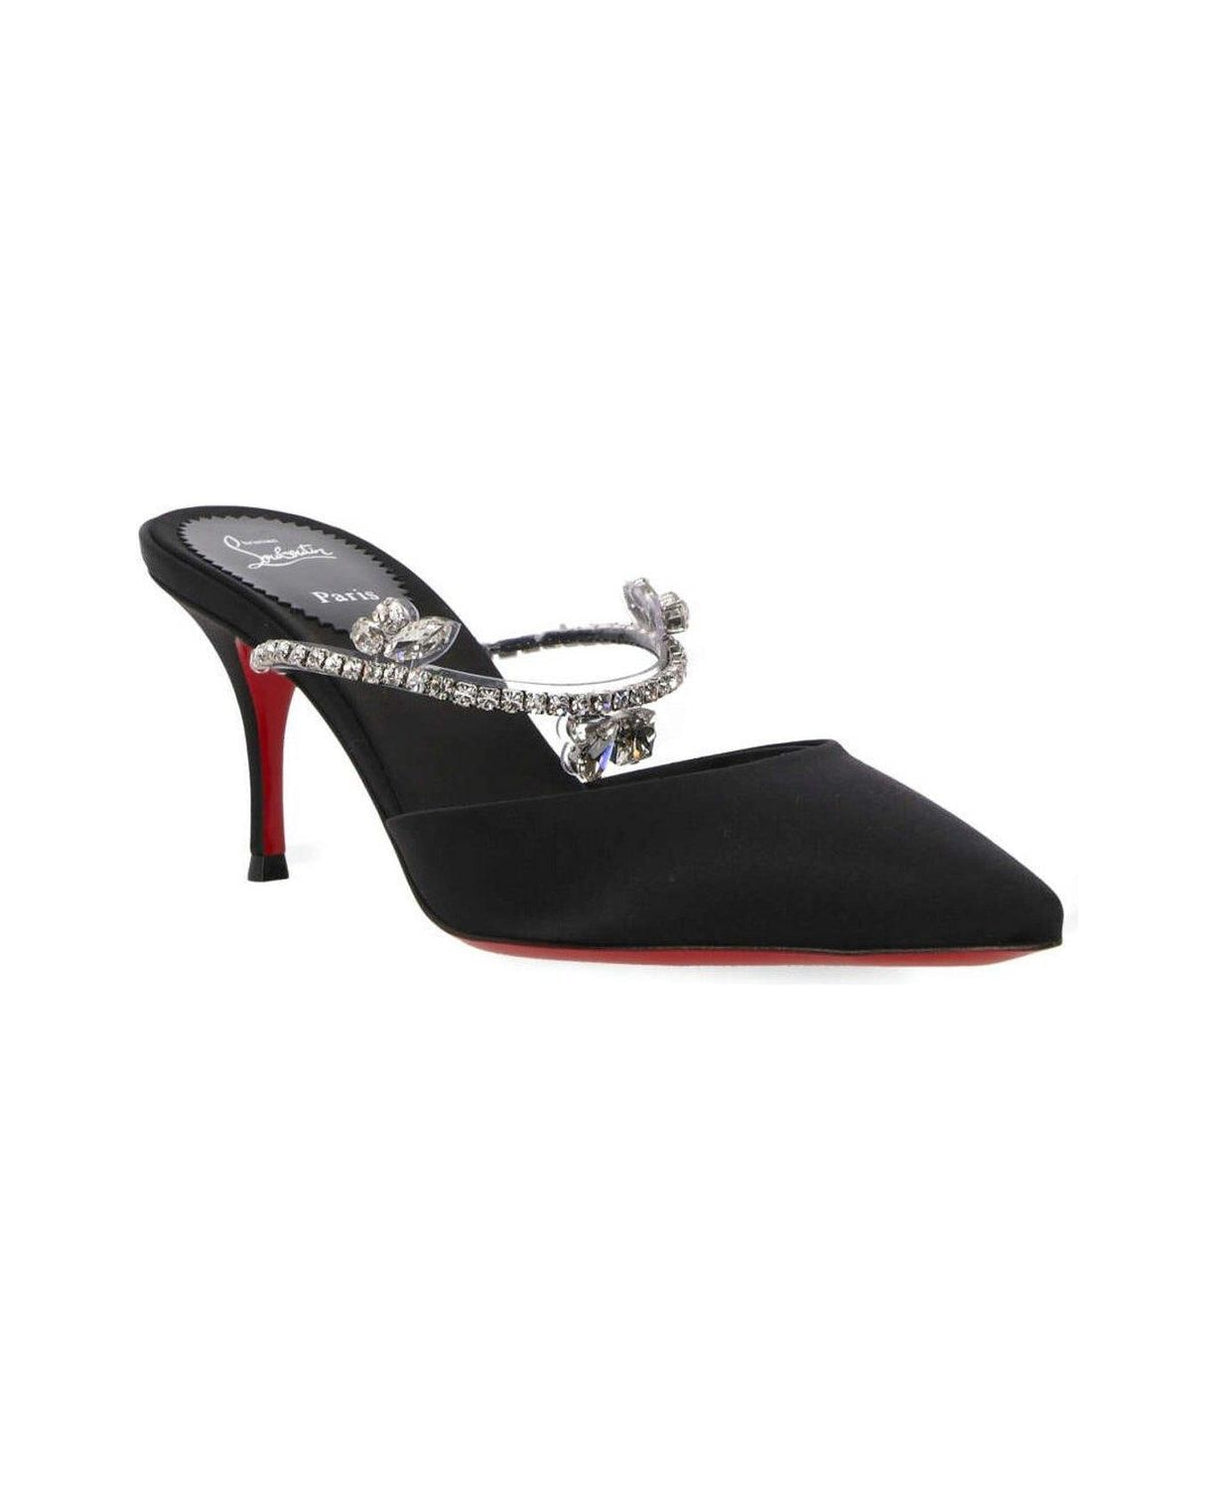 CHRISTIAN LOUBOUTIN Elegant Black Satin Crystal-Embellished Pointed Toe Mid Heel Pumps